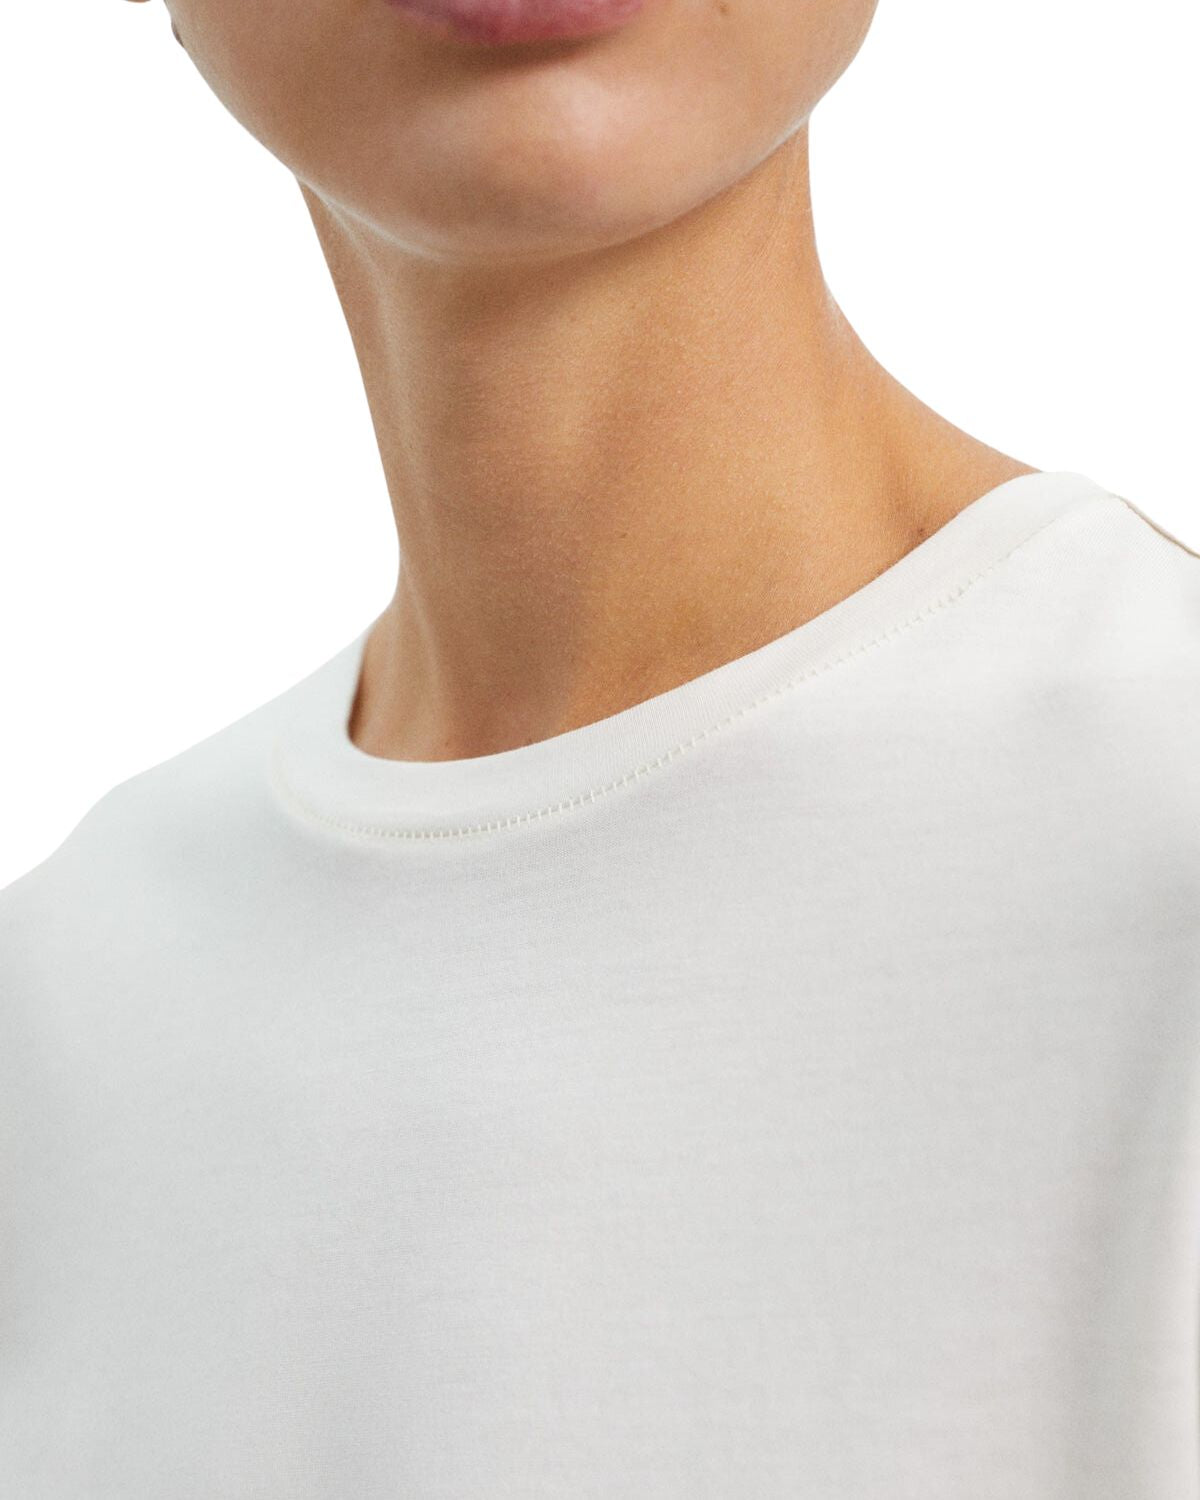 Alayoralf Off white - T-Shirt Damen